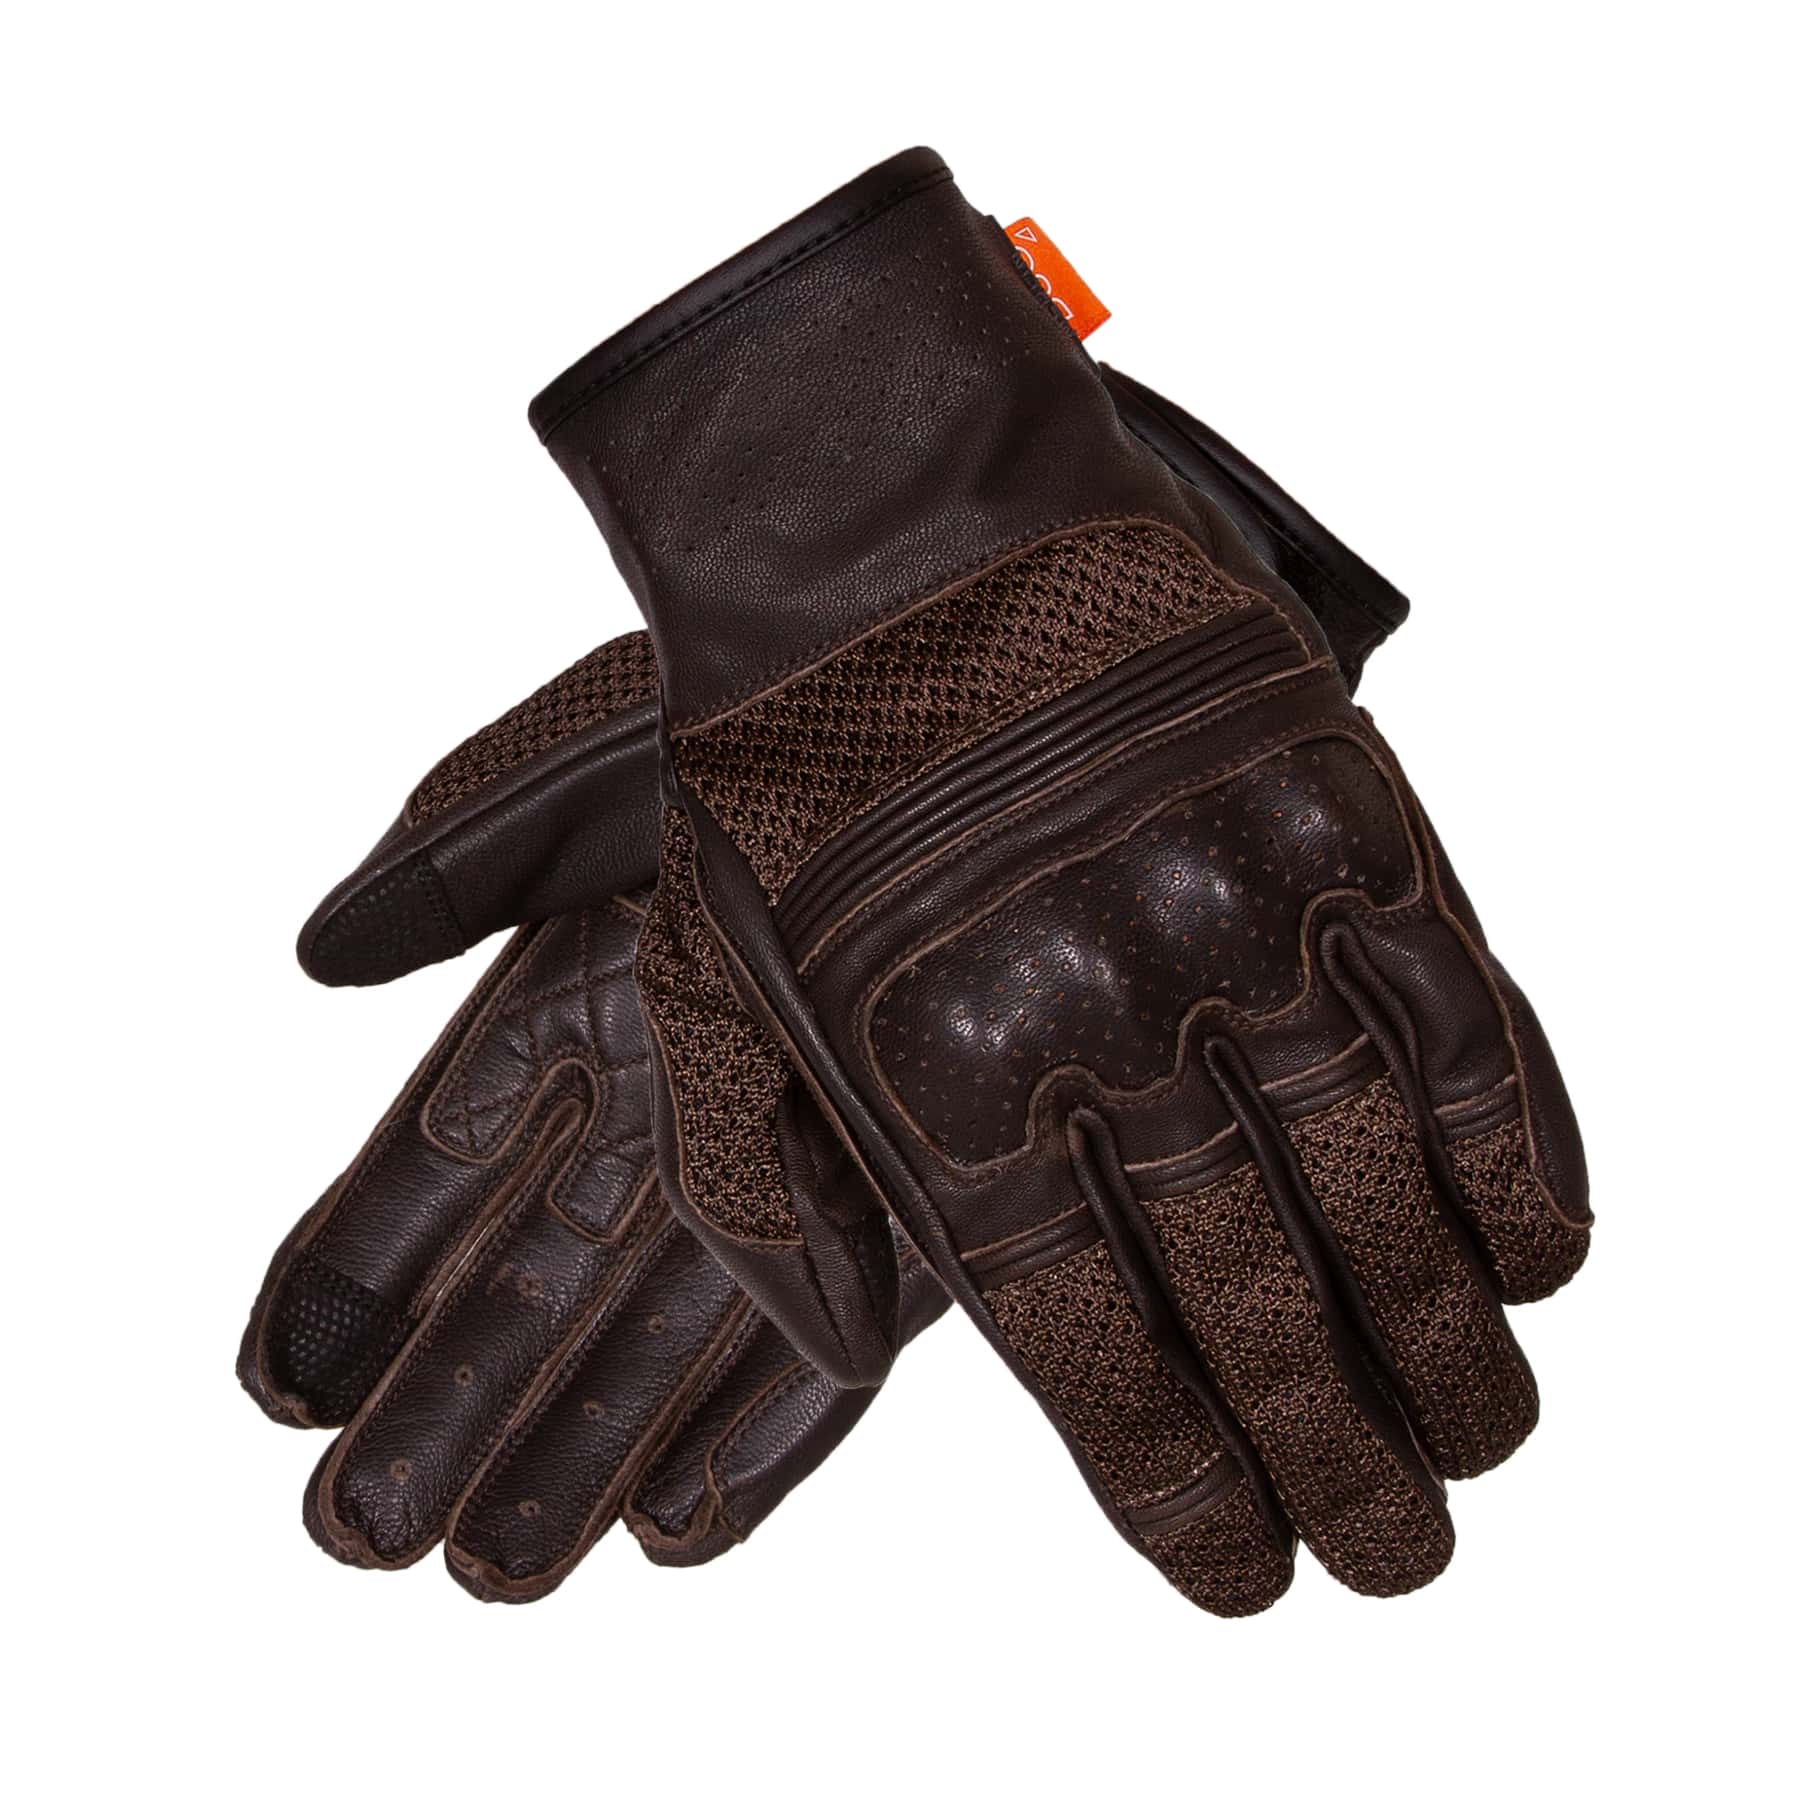 Image of Merlin Shenstone D3O mesh glove in brown